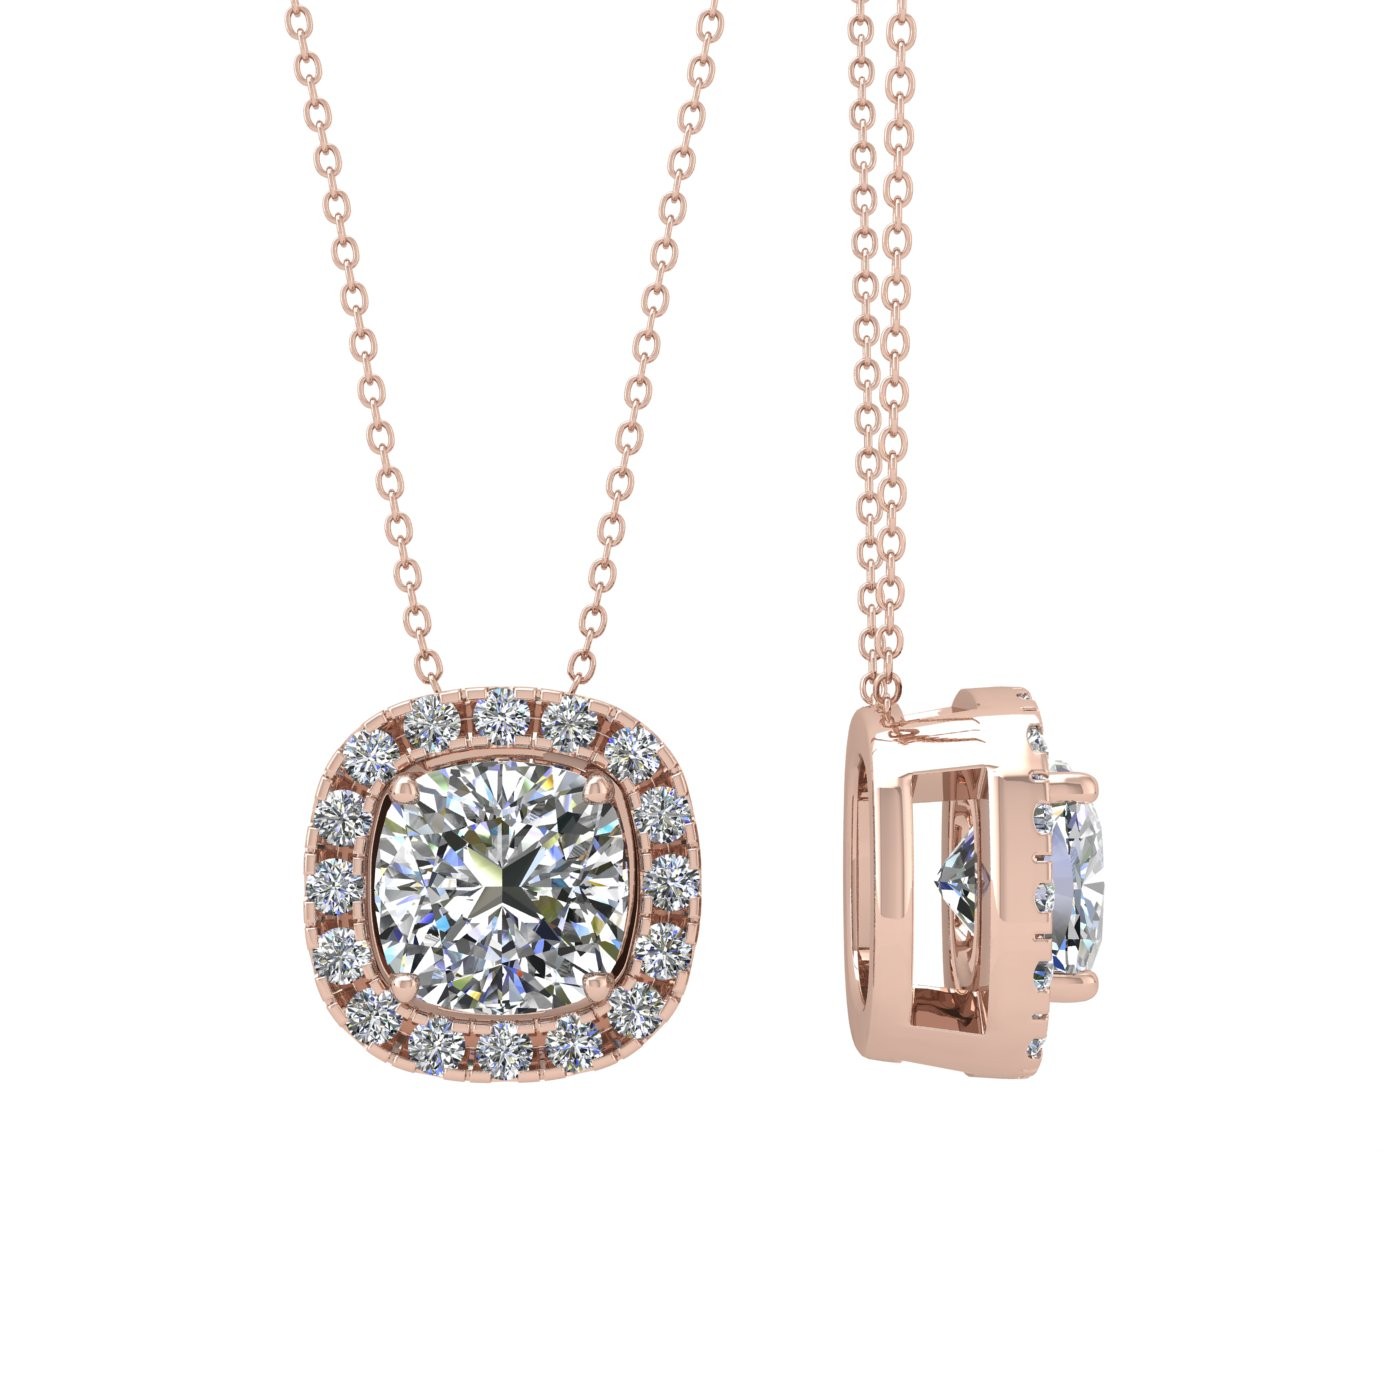 18k rose gold 0,3 ct 4 prongs cushion shape diamond pendant with diamond pavÉ set halo Photos & images